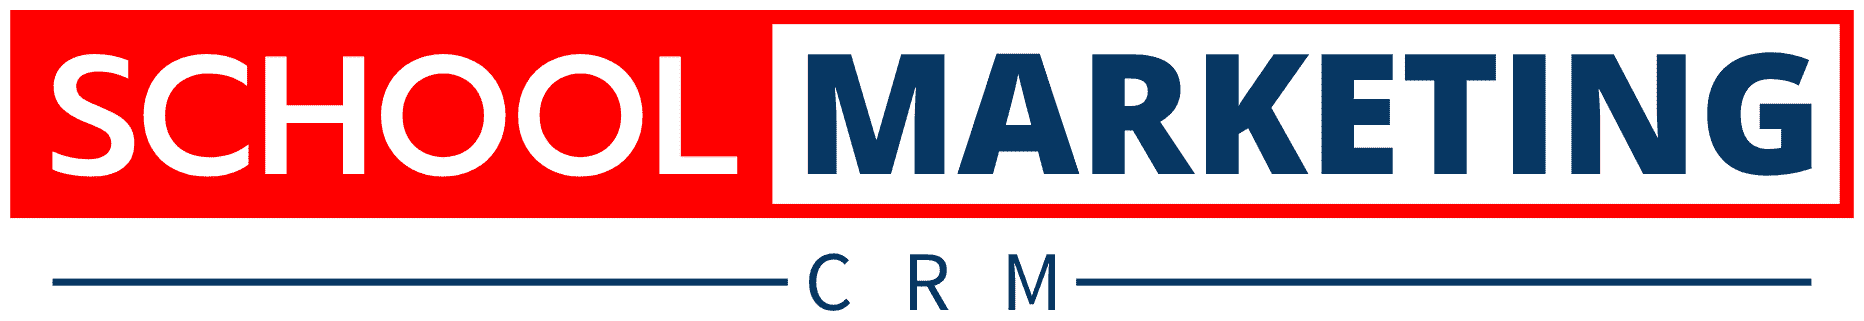 School Marketing Main Logo